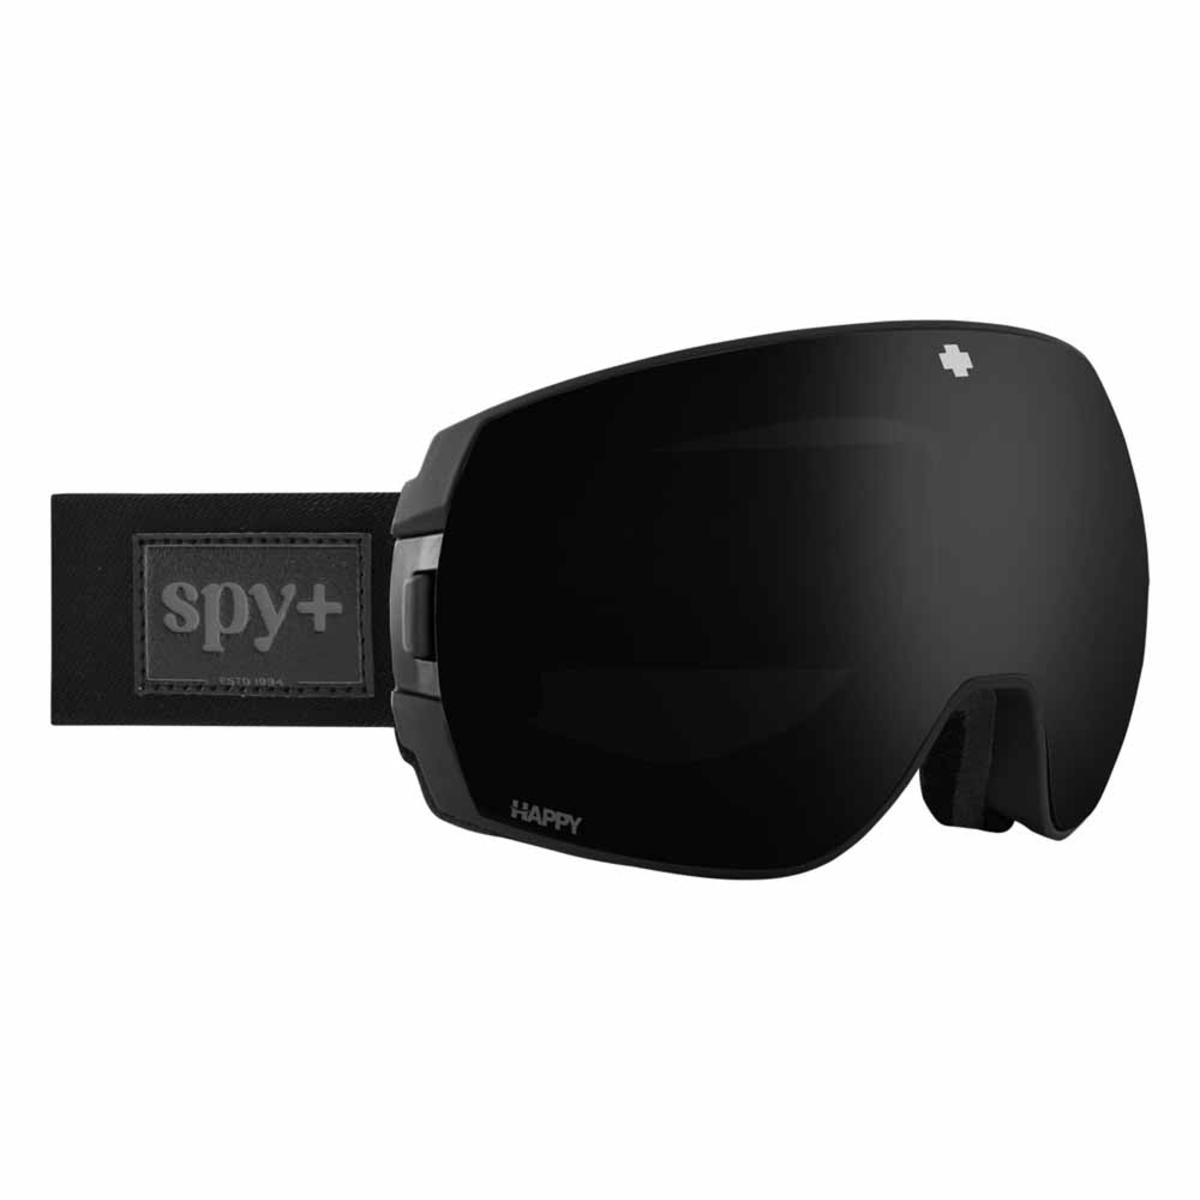 Spy Optic Legacy Goggle Black Rf - Happy Gray Green Black Mirror & Happy Ll Gray Green Red Mirror